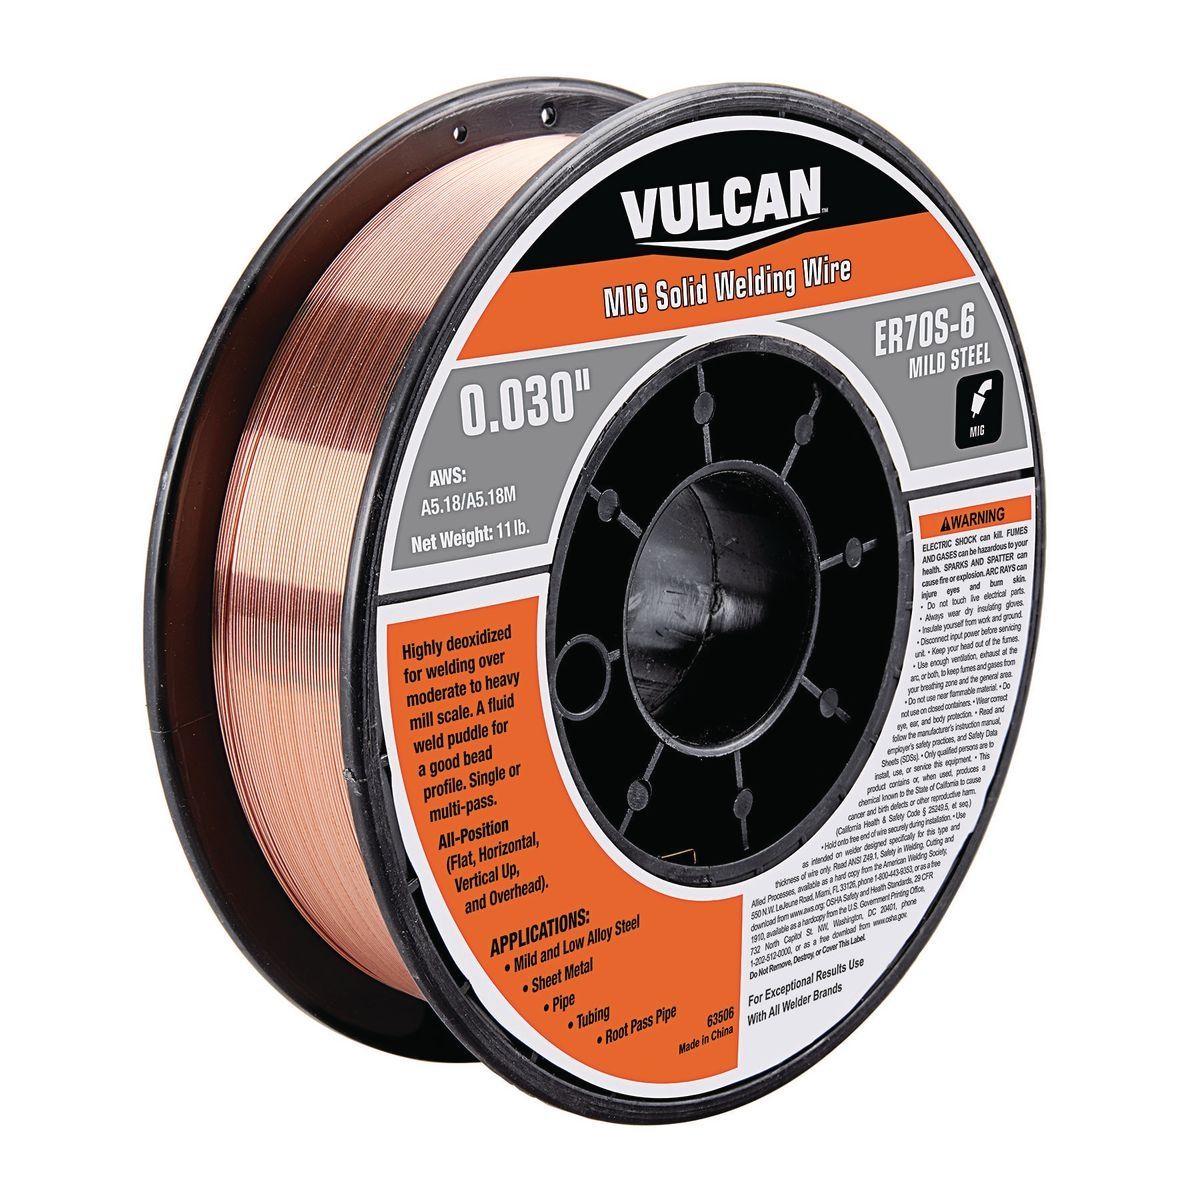 VULCAN 0.030 in. ER70S-6 MIG Solid Welding Wire, 11 lb. Roll